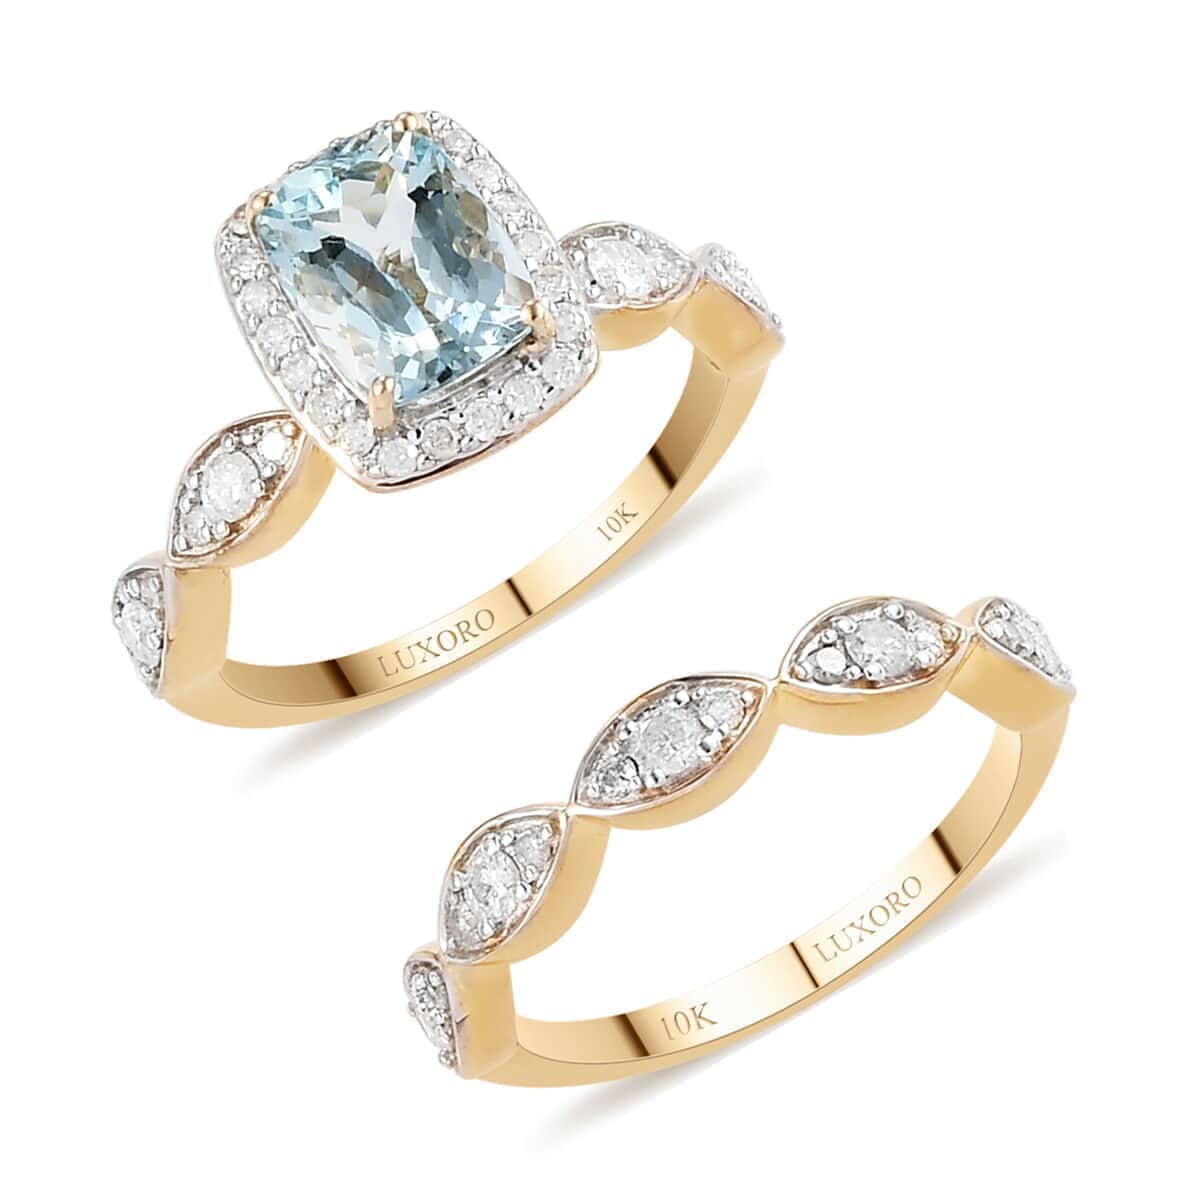 Luxoro 10K Yellow Gold Mangoro Aquamarine and G-H I3 Diamond Set of 2 Ring (Size 8.0) 4.45 Grams 1.85 ctw image number 0